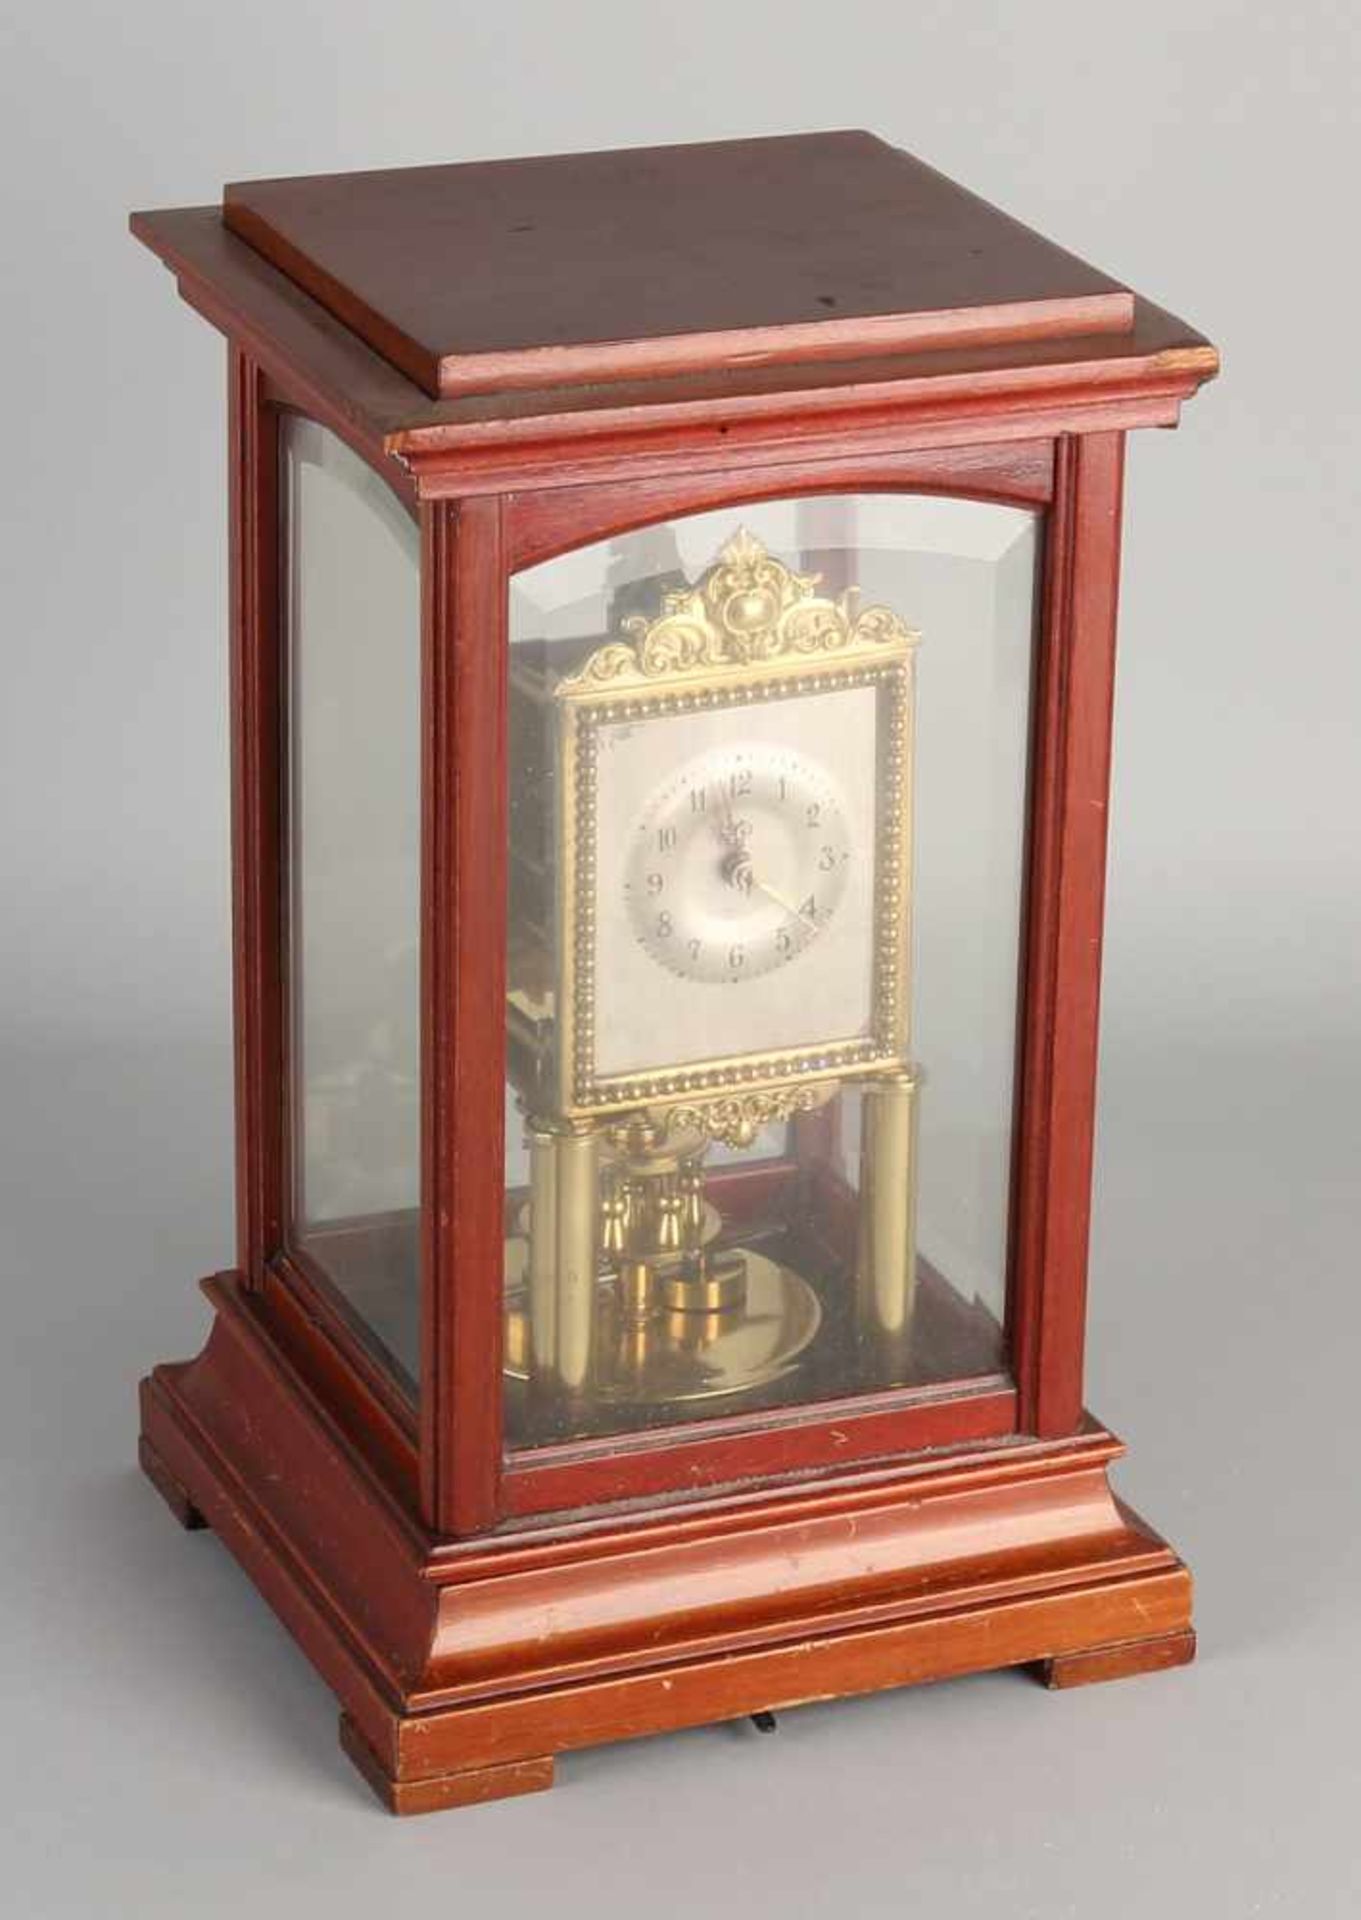 Antique mahogany Gustav Becker years pendulum clock with cut glass. Circa 1900. Dimensions: H 32 cm. - Bild 2 aus 2